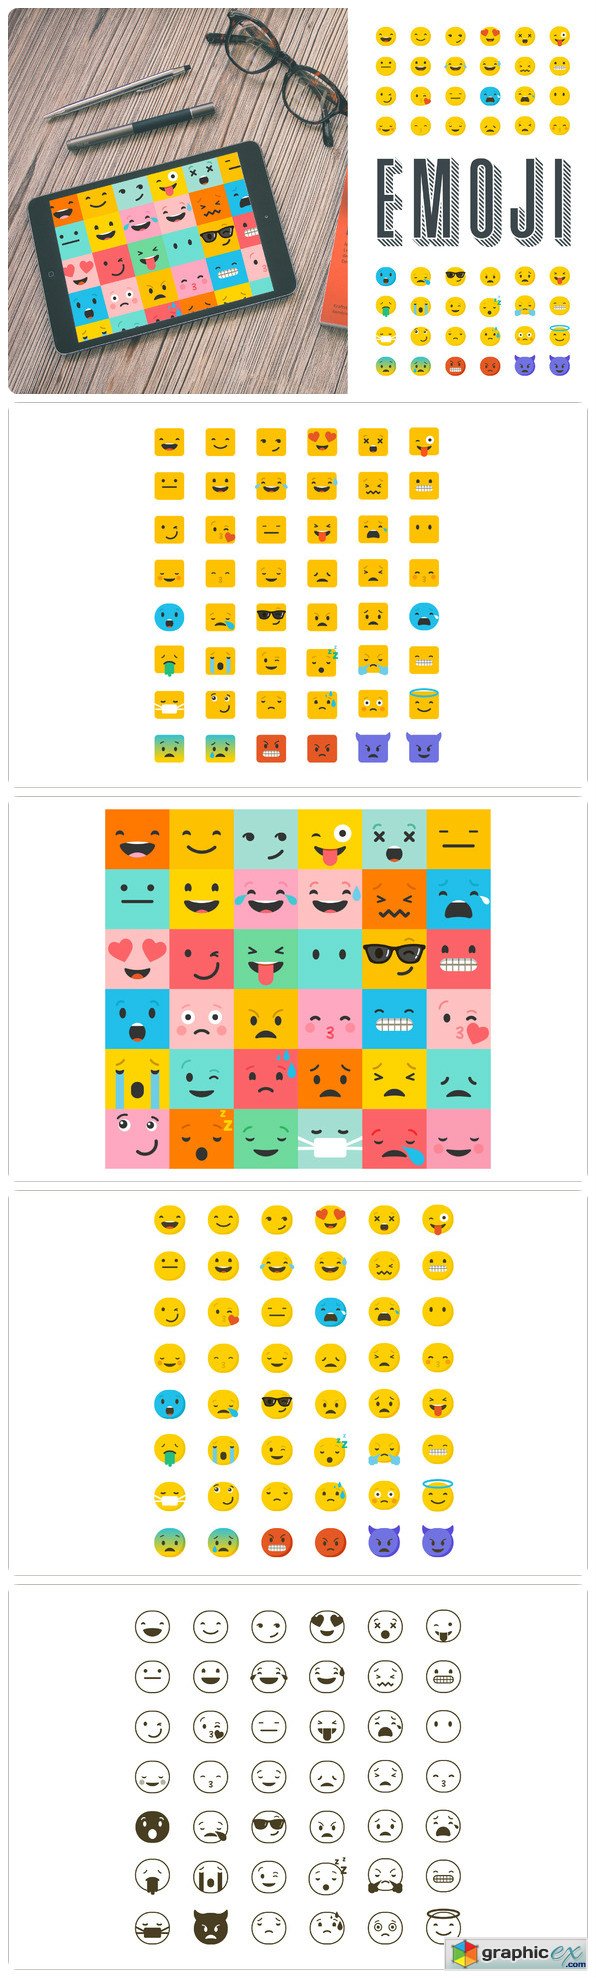 Emoji emoticons bundle of icons